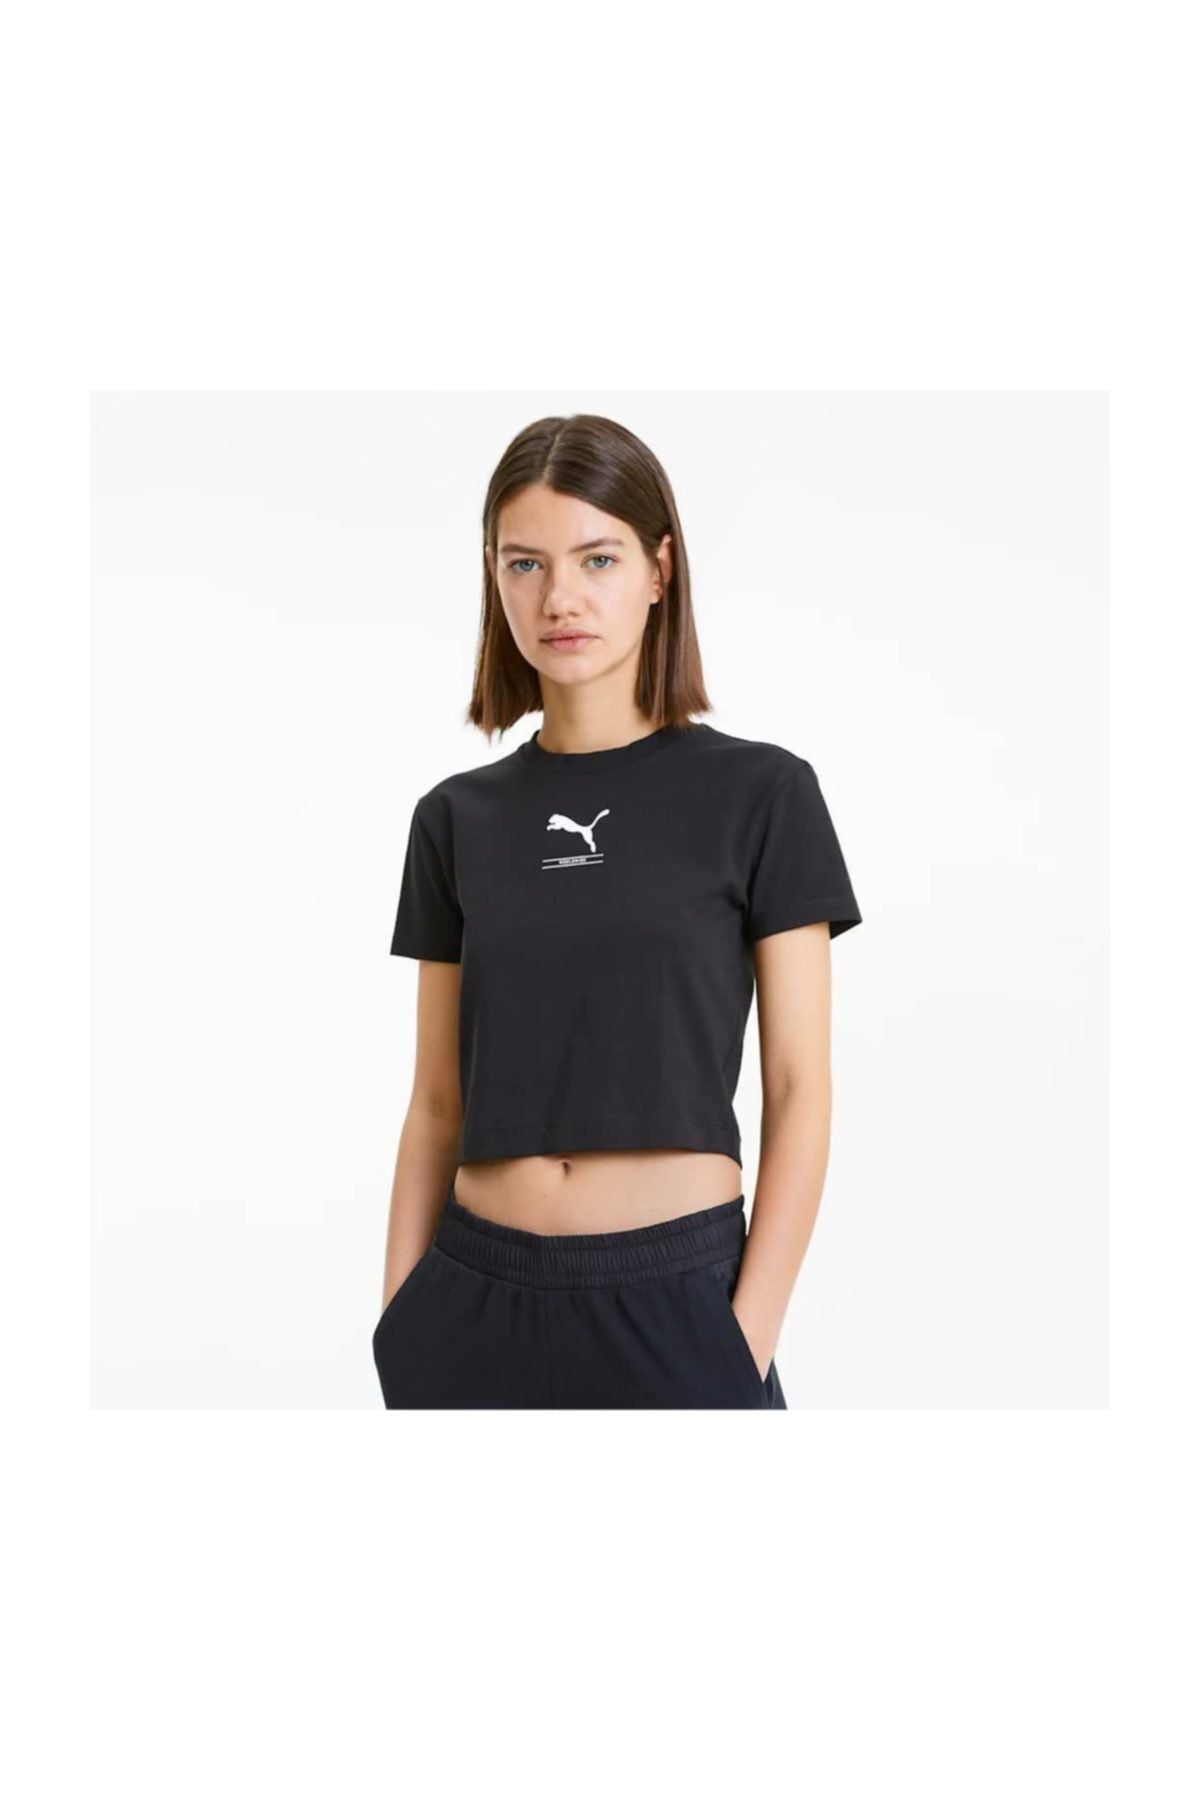 Puma Kadın T-Shirt - Nu-tility Fitted Tee - 58137701